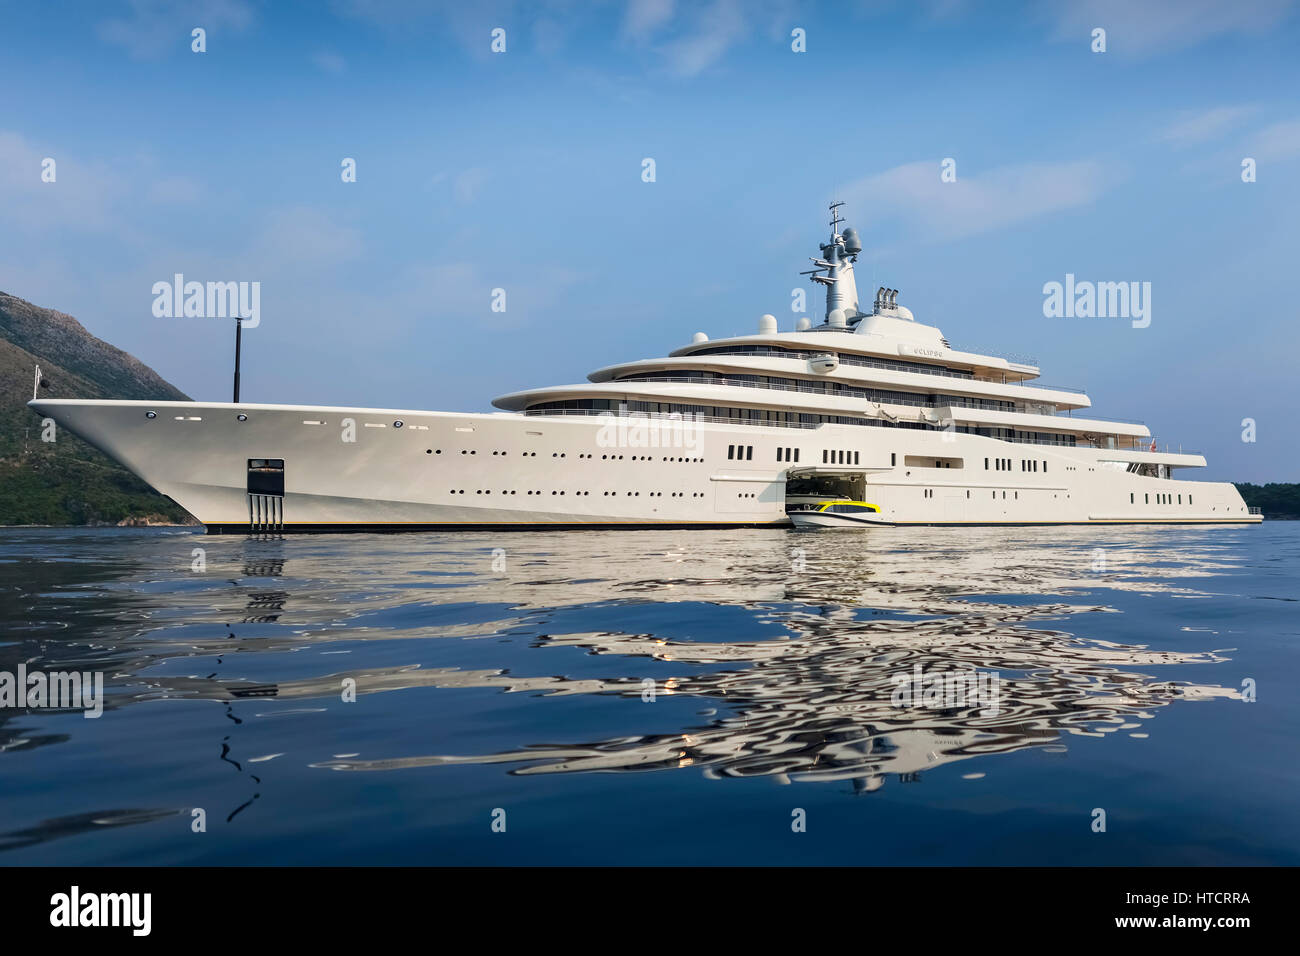 abramovich yacht croatia